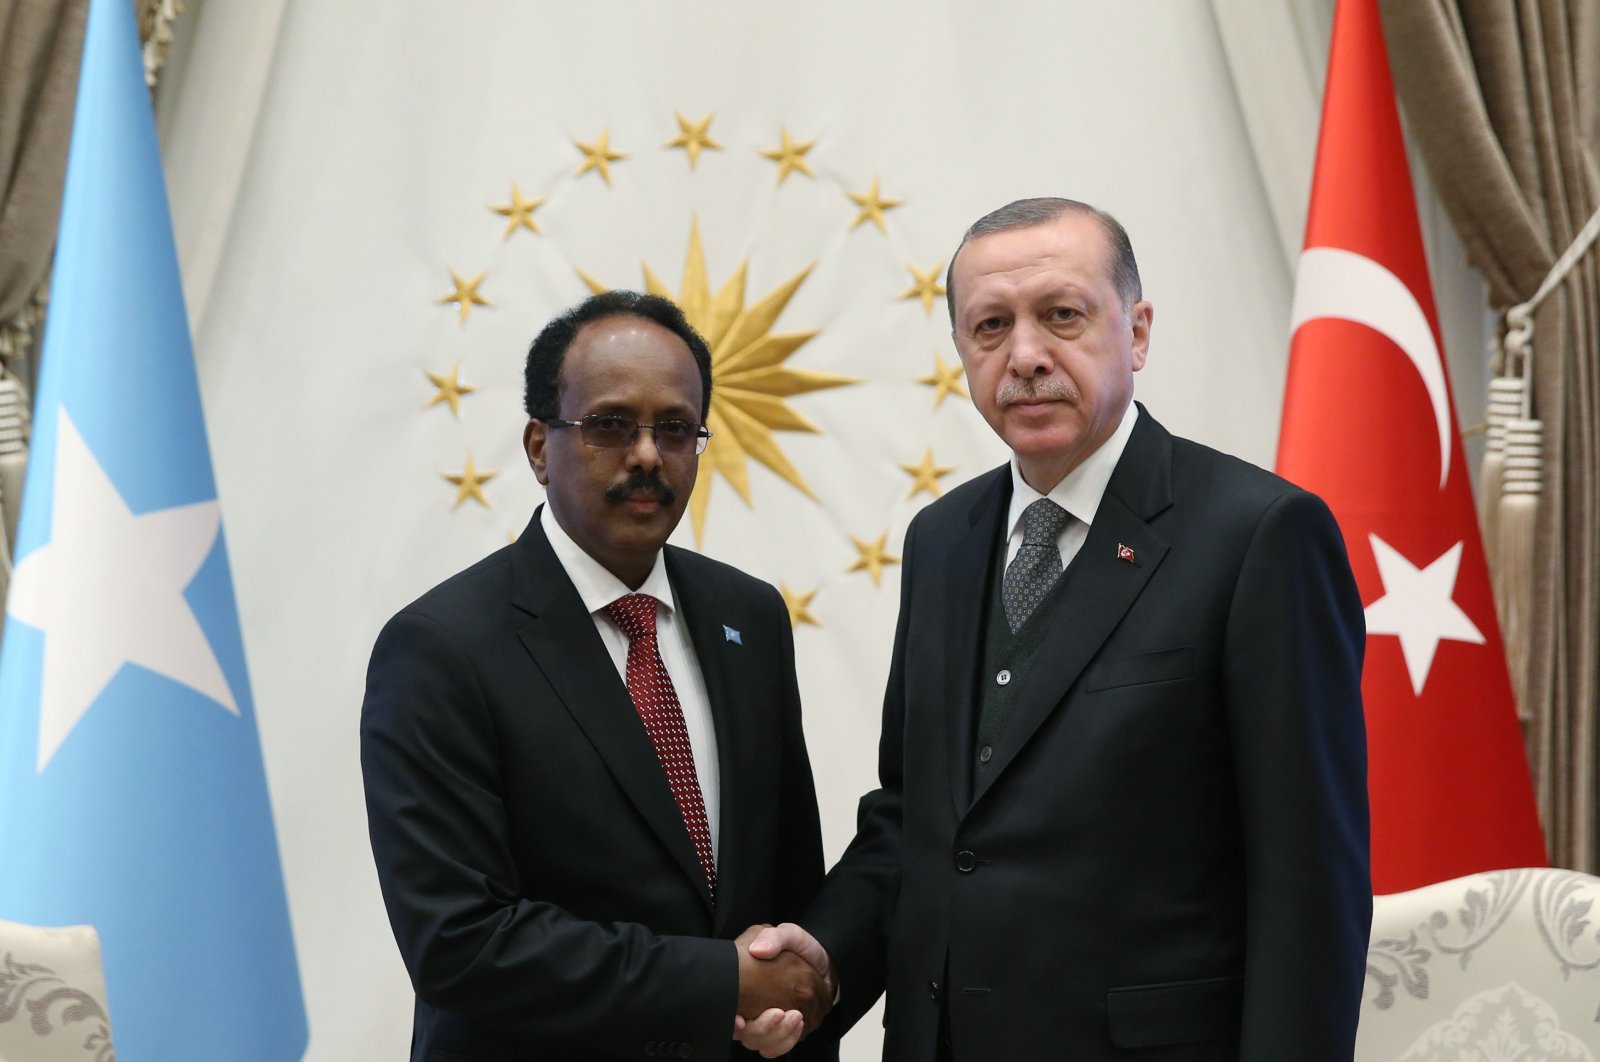 President Recep Tayyip Erdoğan shakes hands with his Somali counterpart Mohamed Abdullahi Farmaajo in Ankara, Turkey, April 26, 2017. (Photo by Ali Ekeyılmaz)